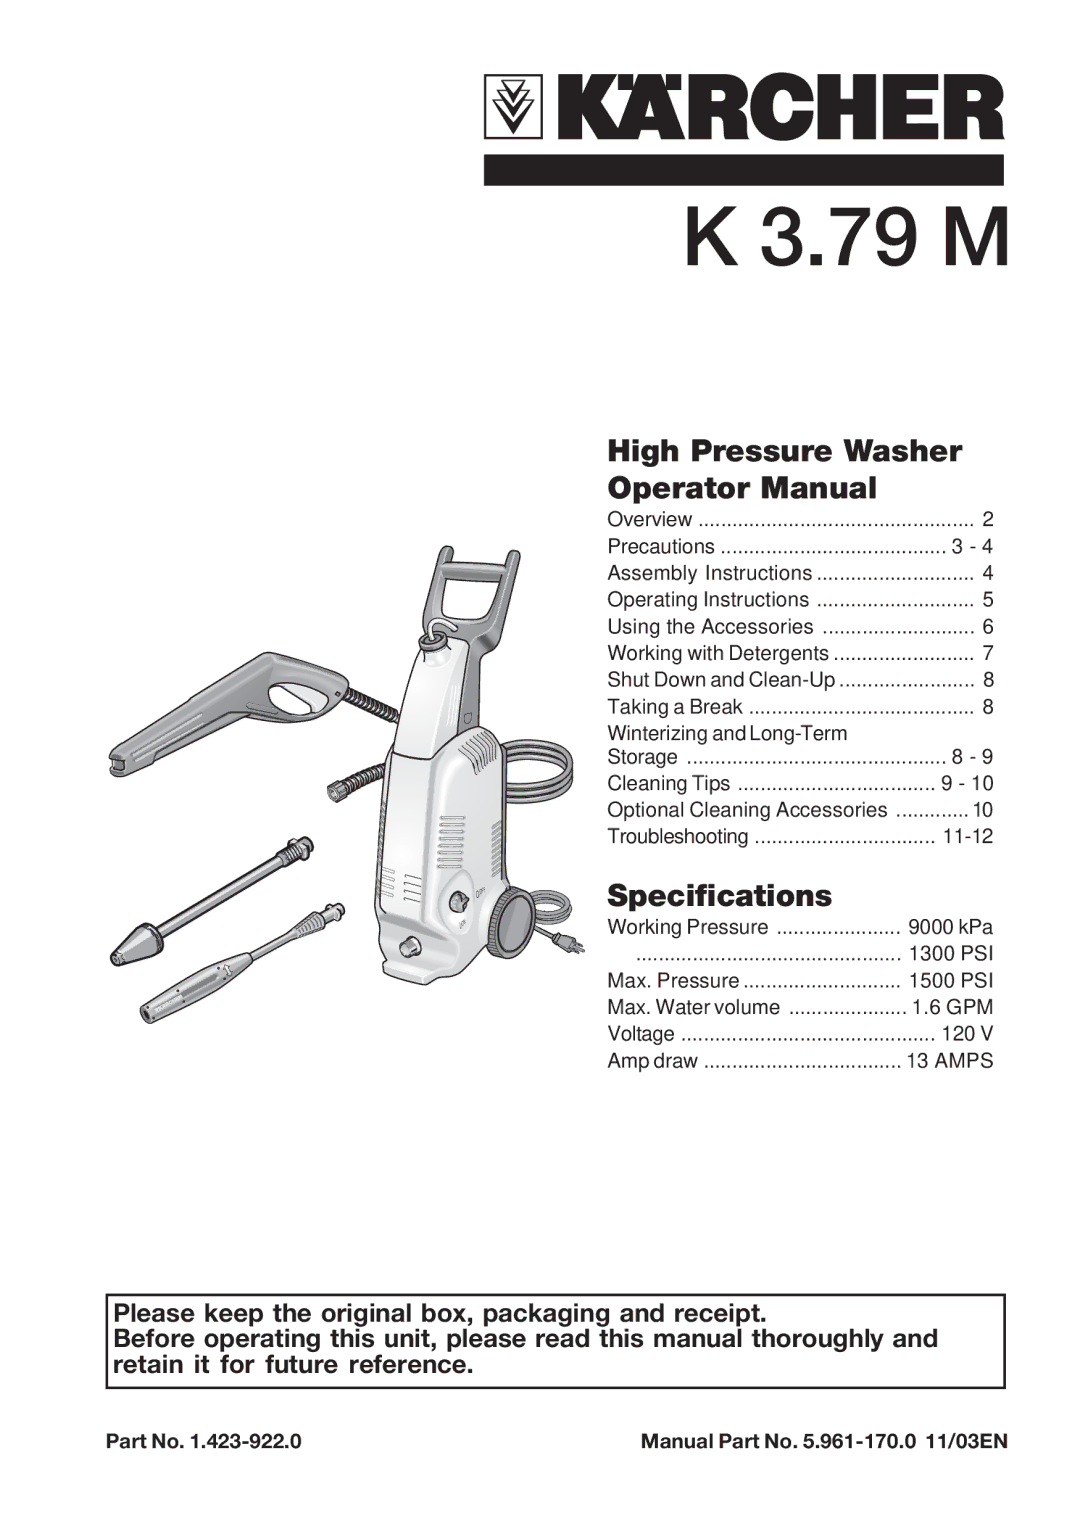 Karcher K 3.79 M specifications 